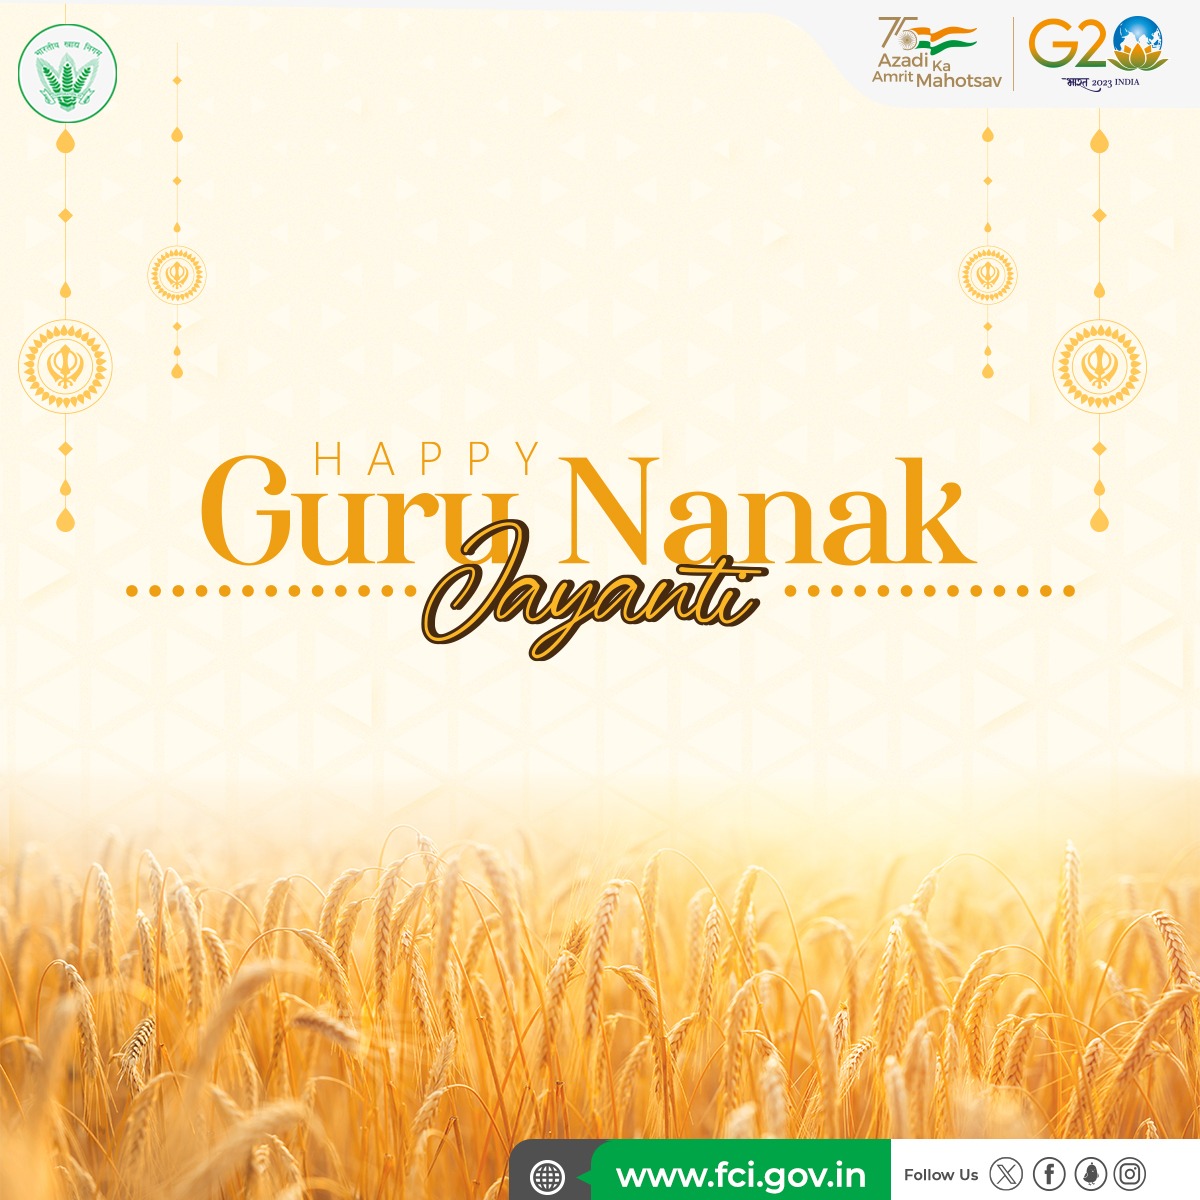 FCI extends heartfelt wishes on Guru Nanak Jayanti! #GuruNanakJayanti